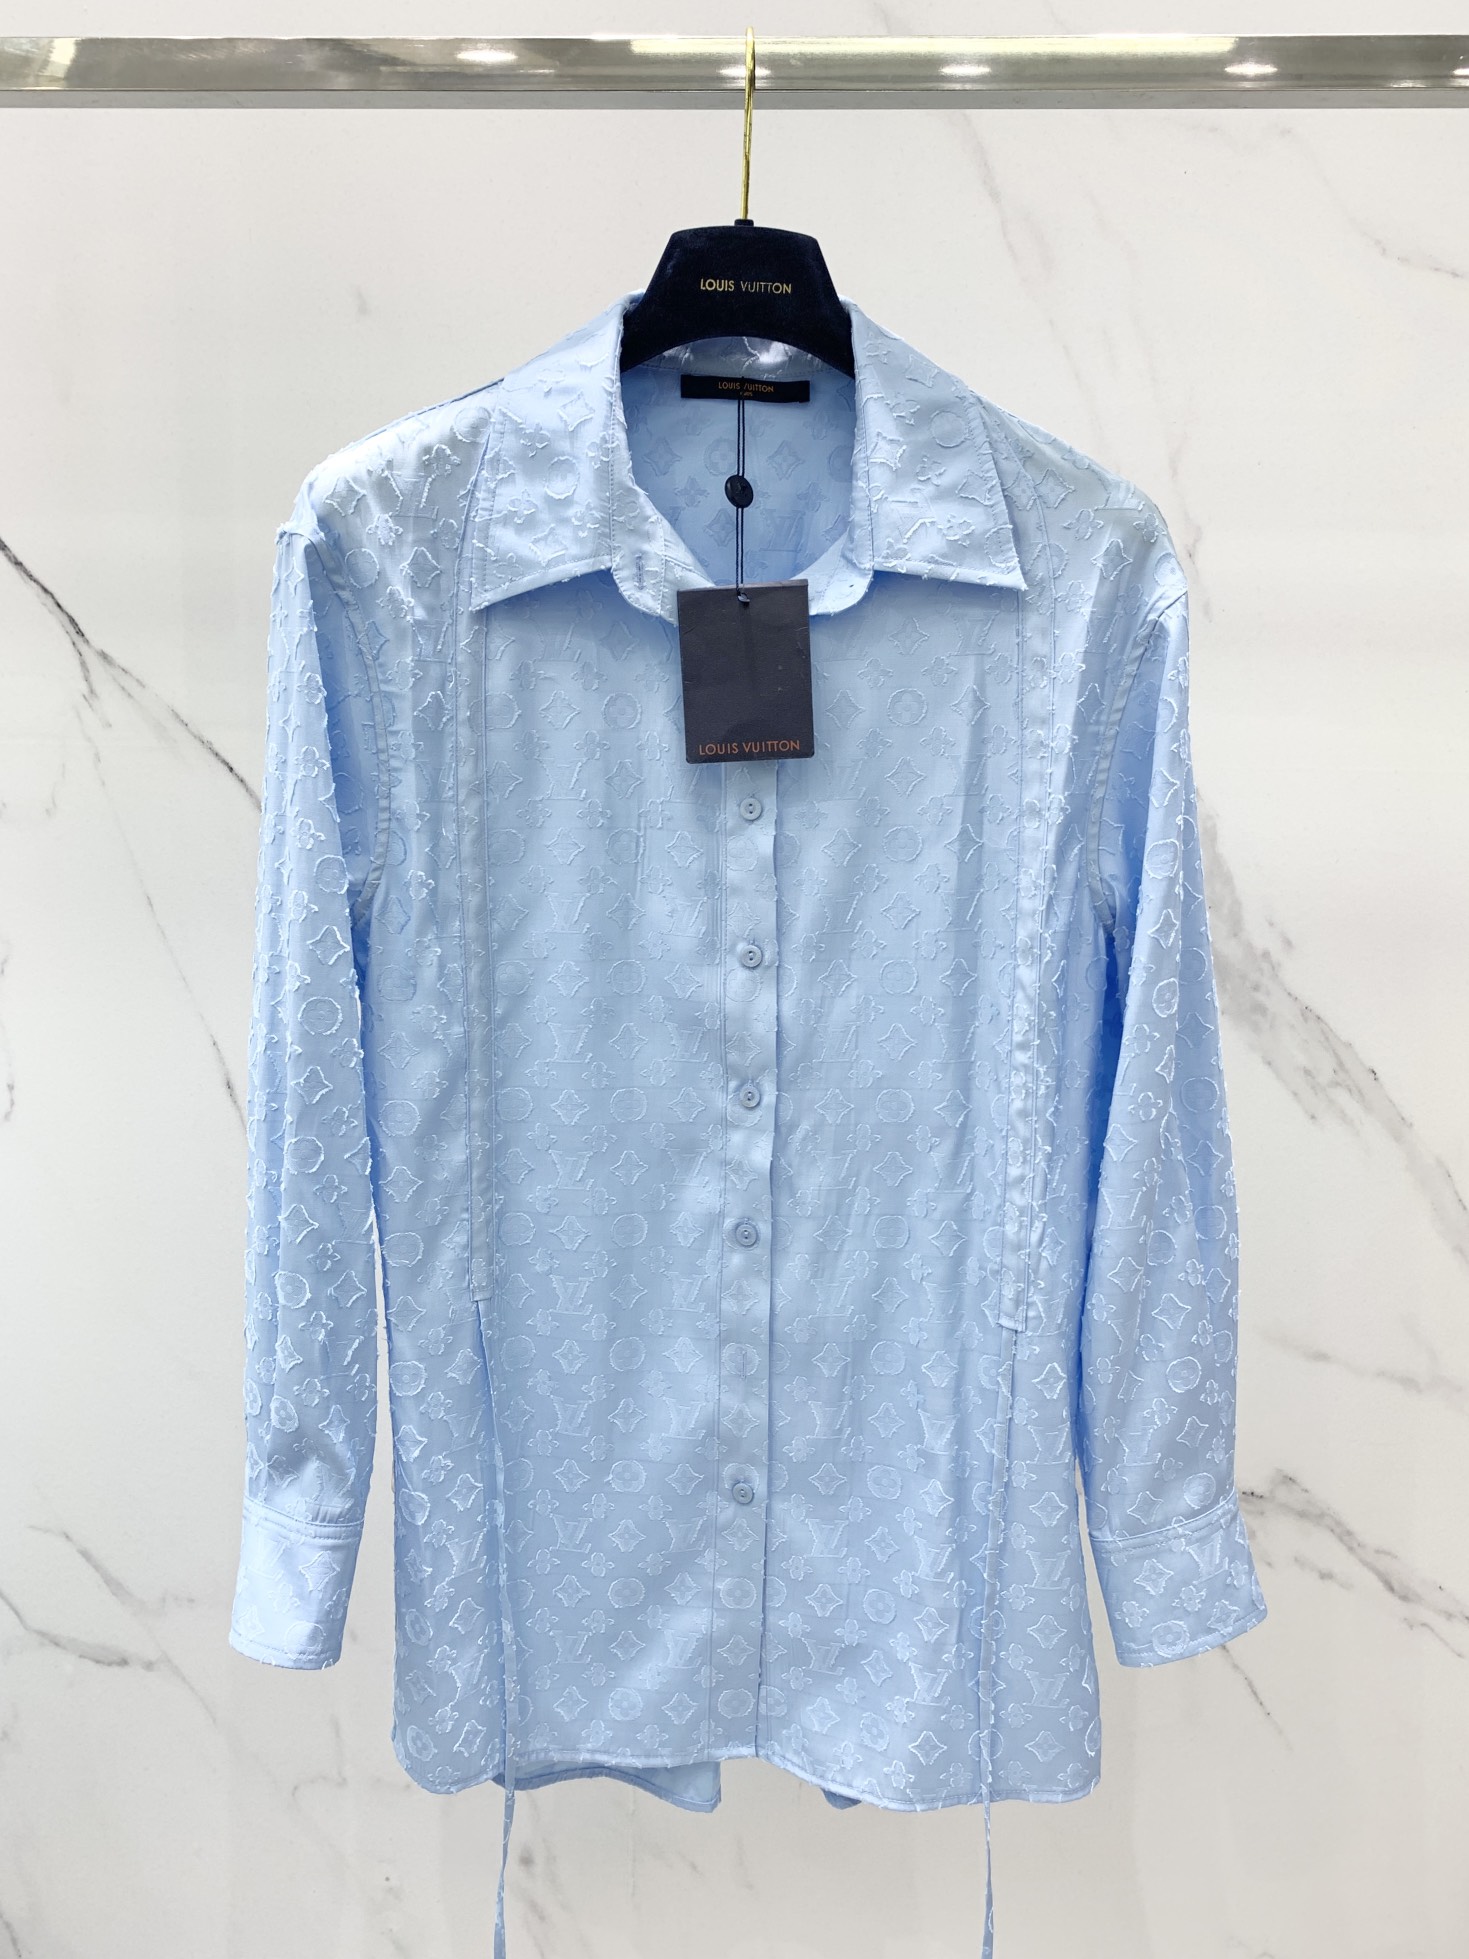 Louis Vuitton Clothing Shirts & Blouses Windbreaker Cotton